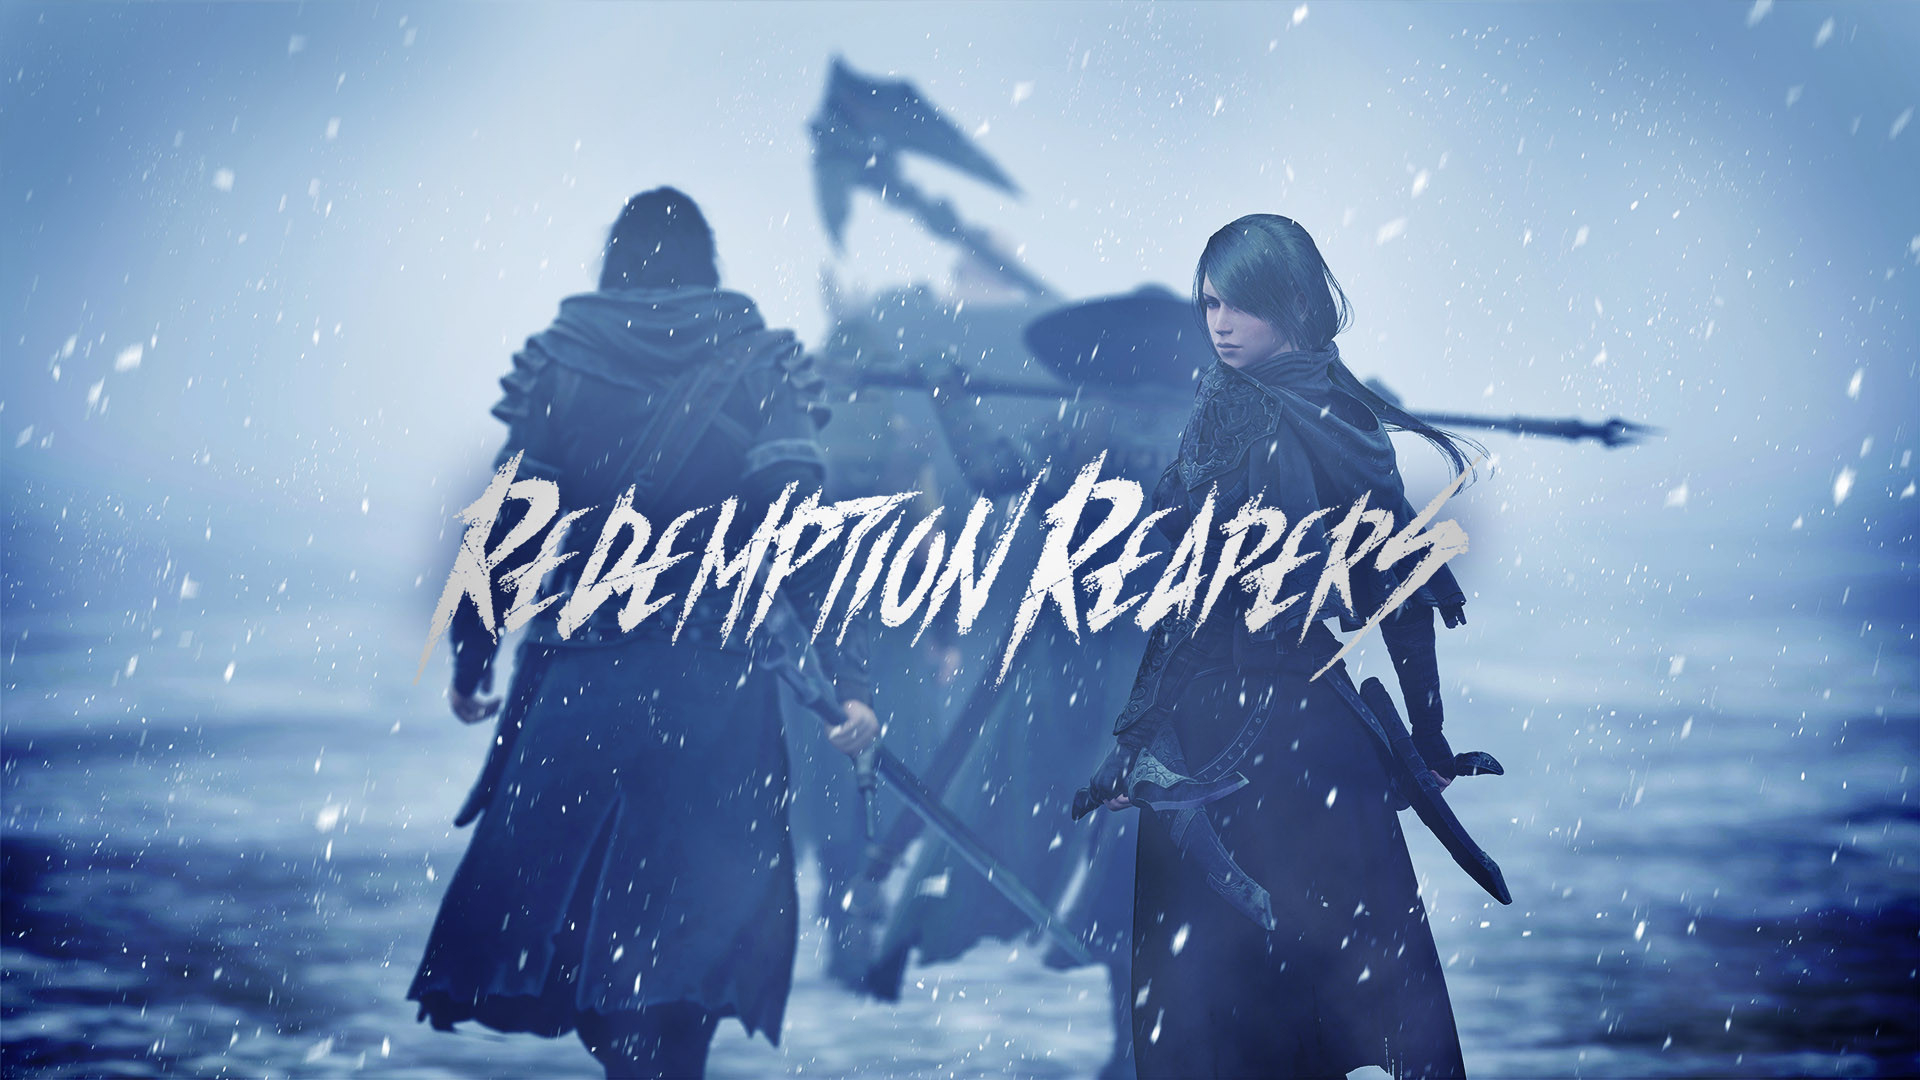 Обложка игры Redemption Reapers